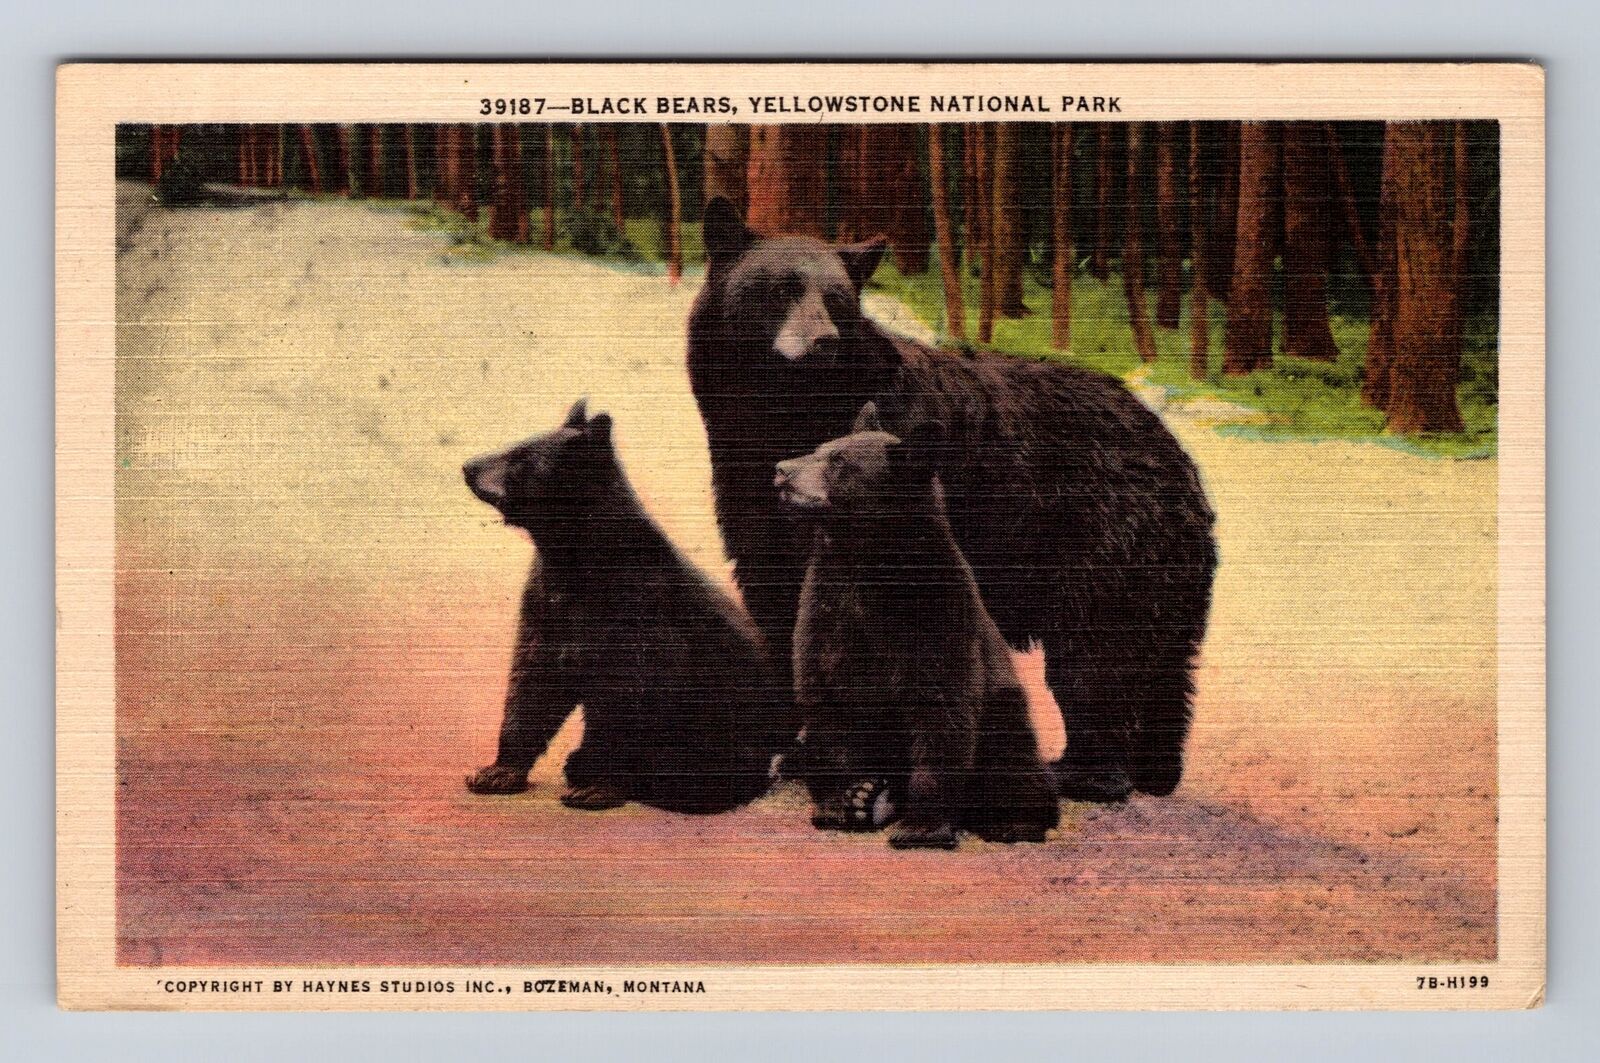 Yellowstone National Park, Black Bears, Series #39187, Vintage Souvenir Postcard